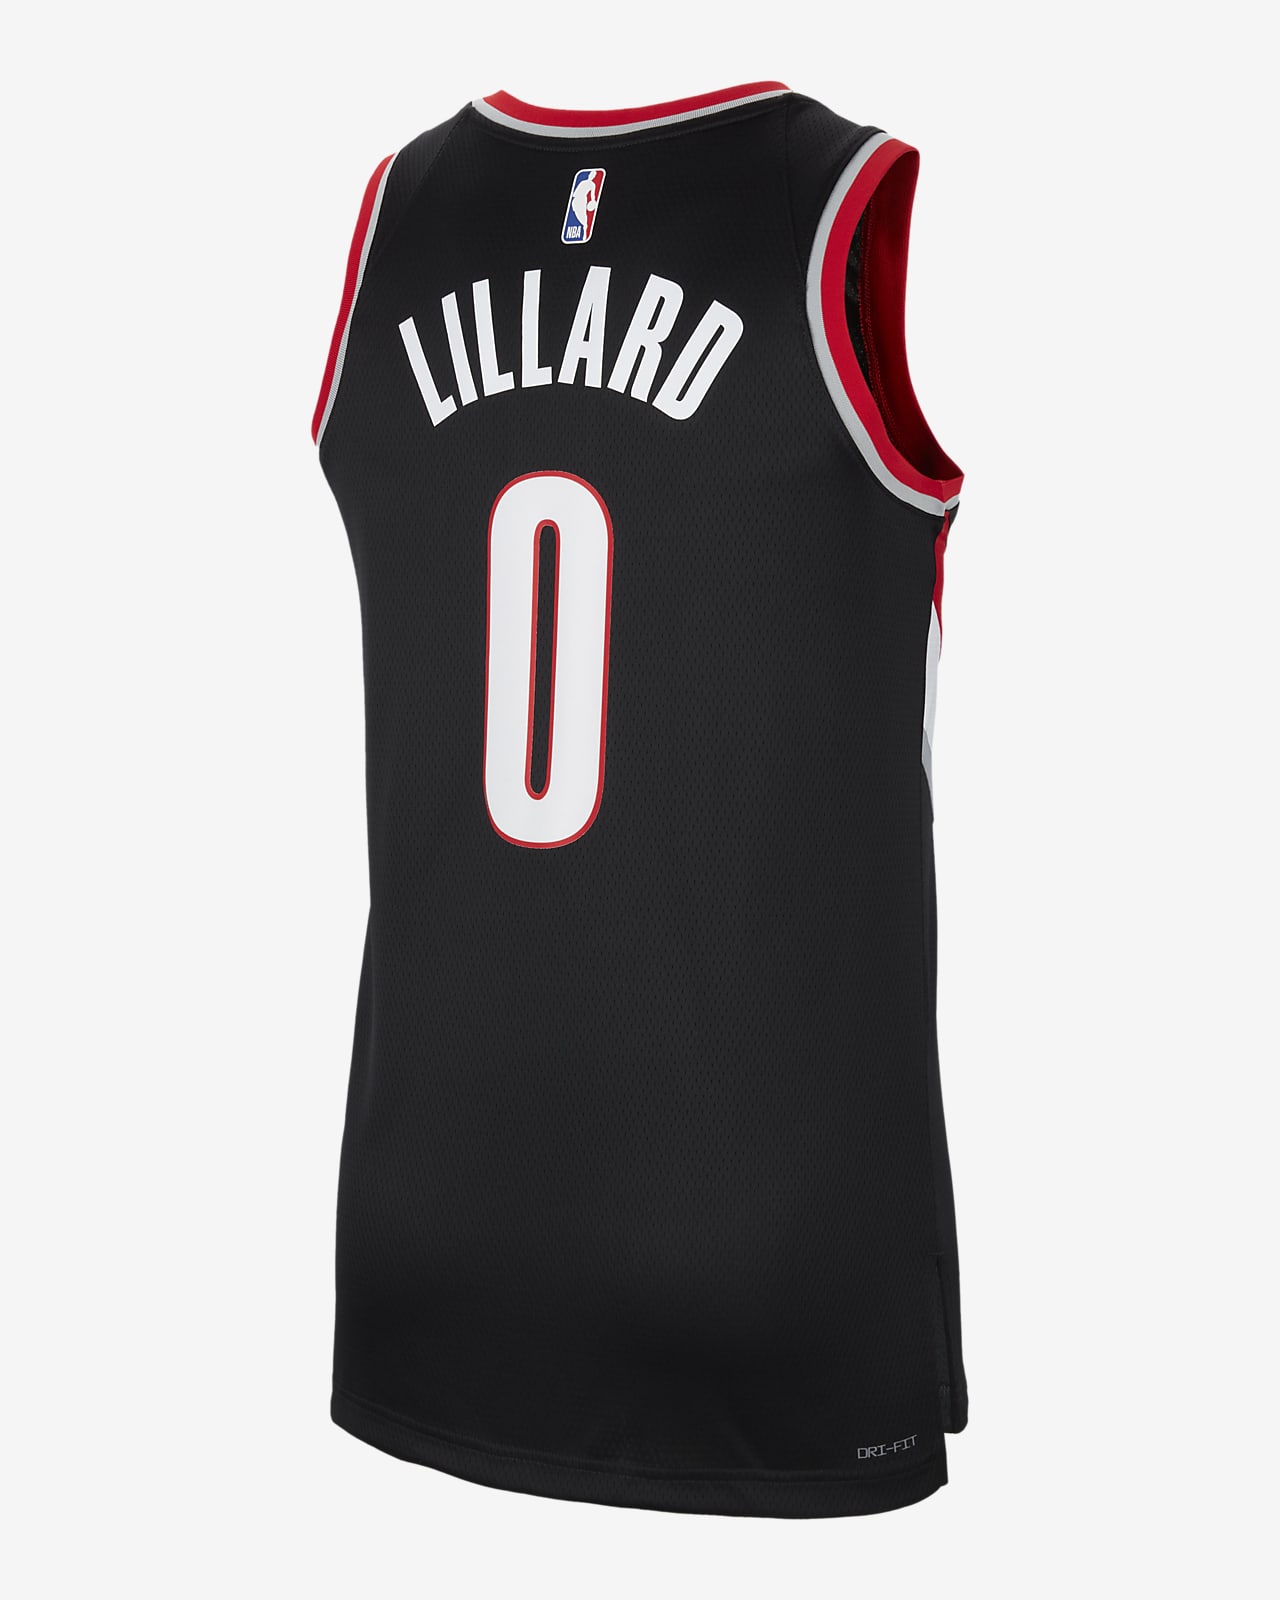 Portland Trail Blazers Icon Edition 2022/23 Men's Nike Dri-FIT NBA Swingman  Jersey